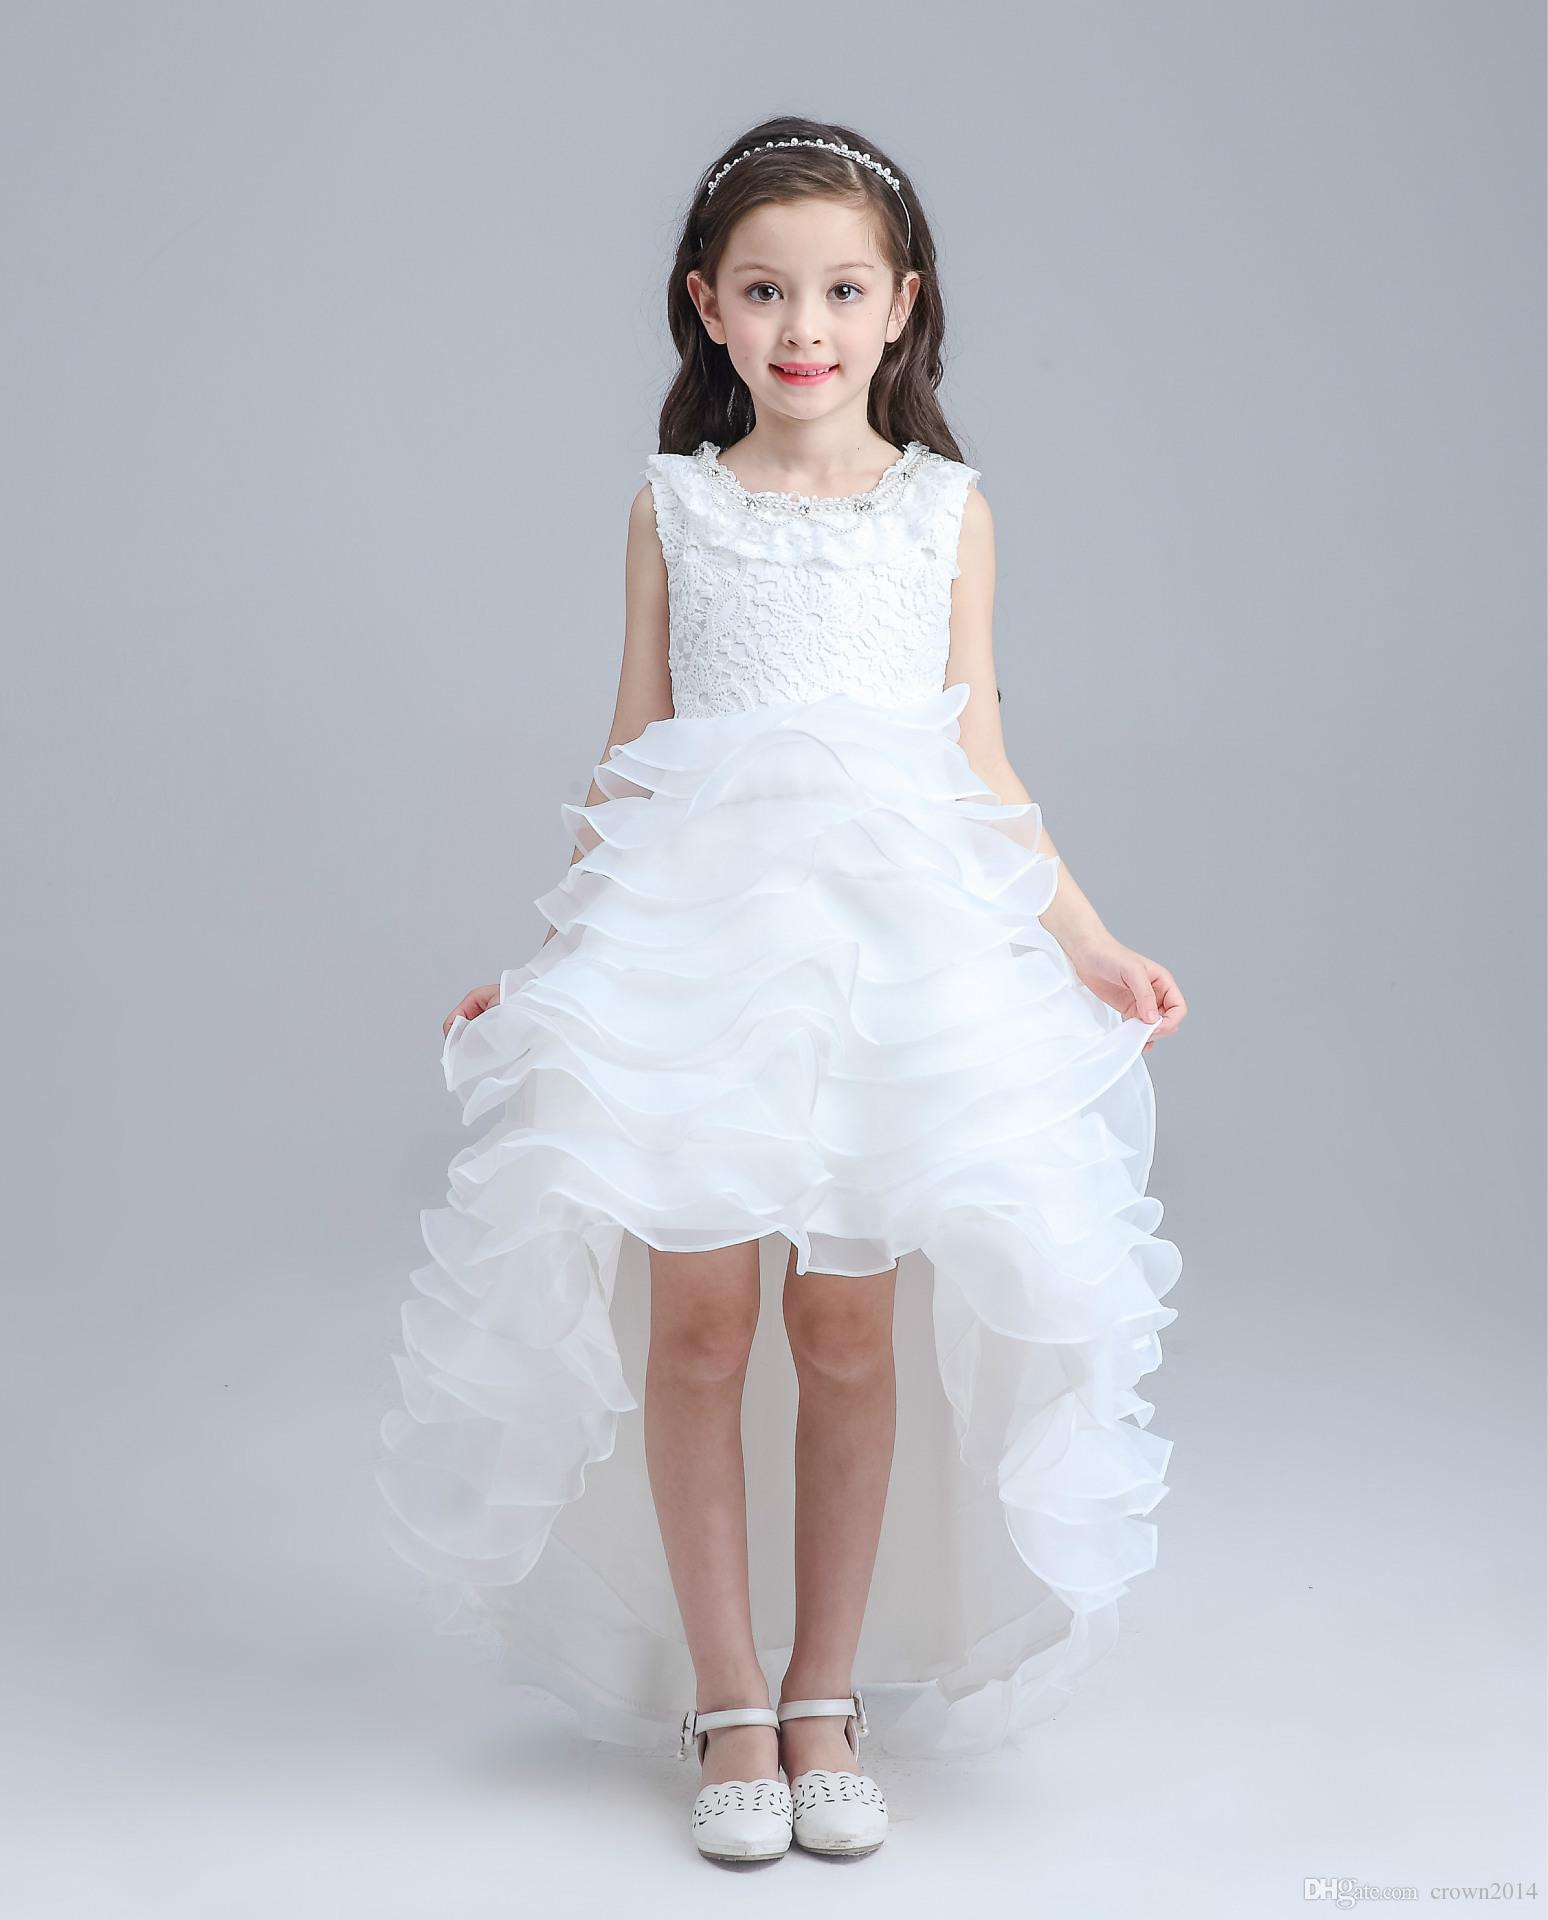 Party Dress For Girl Child
 White Princess Lace Children Flower Girl Dresses For